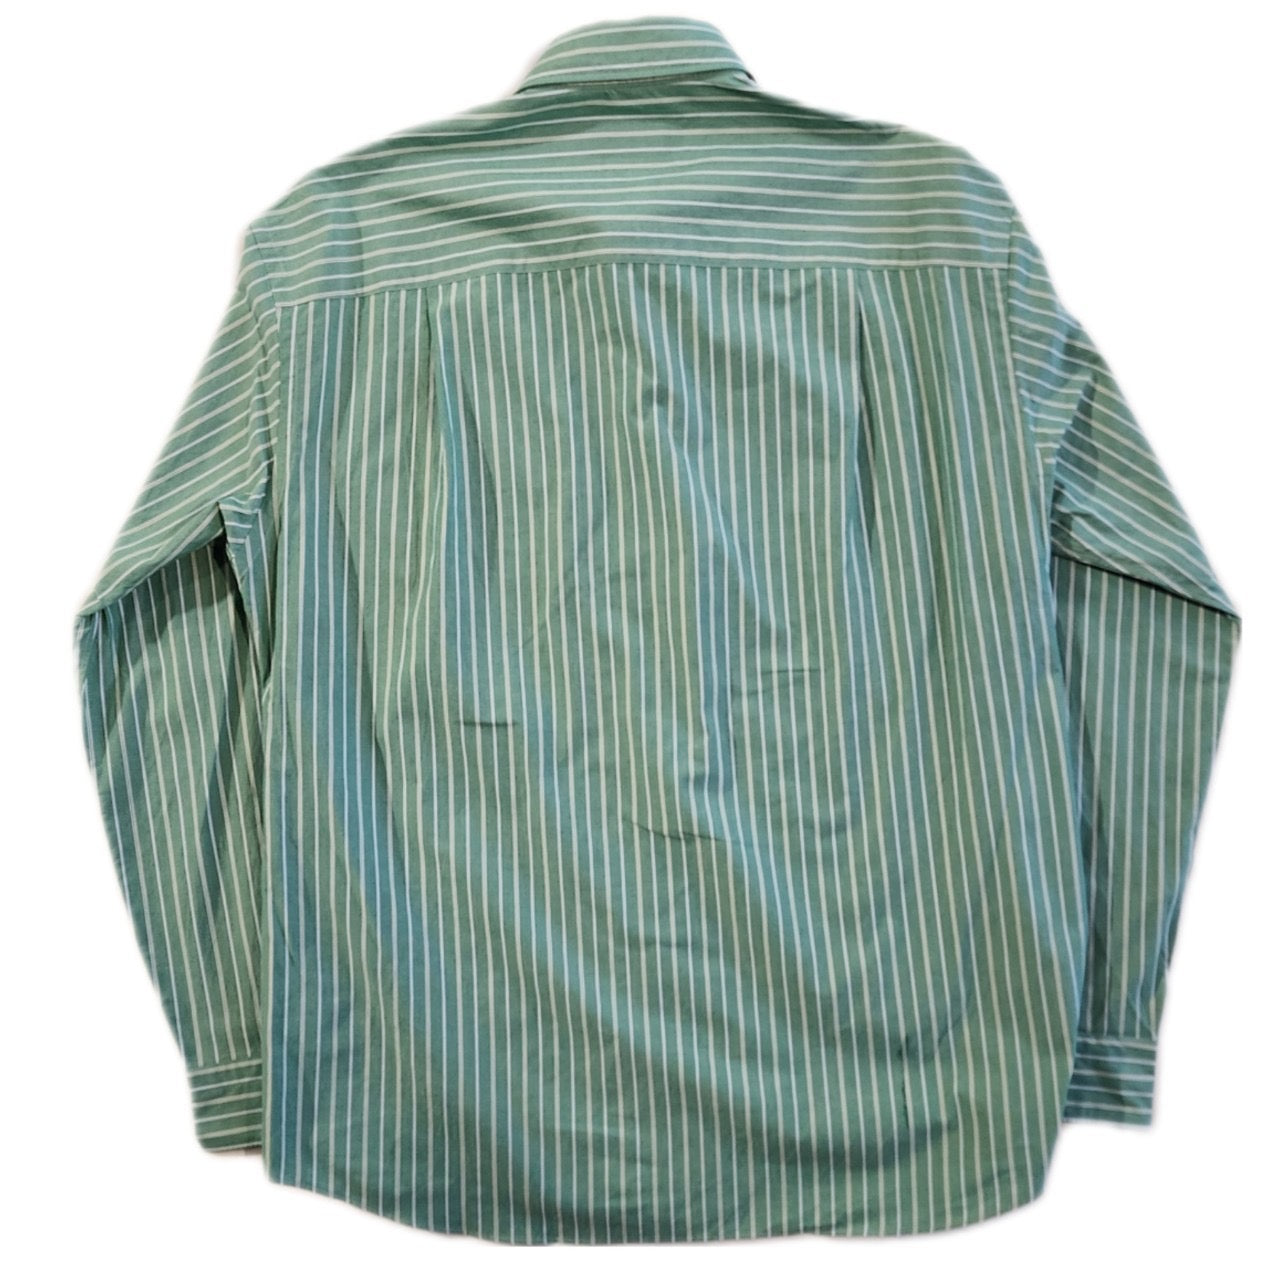 COLONY CLOTHING / グリーンストライプ ラウンジシャツ / CC2401-SH03-01